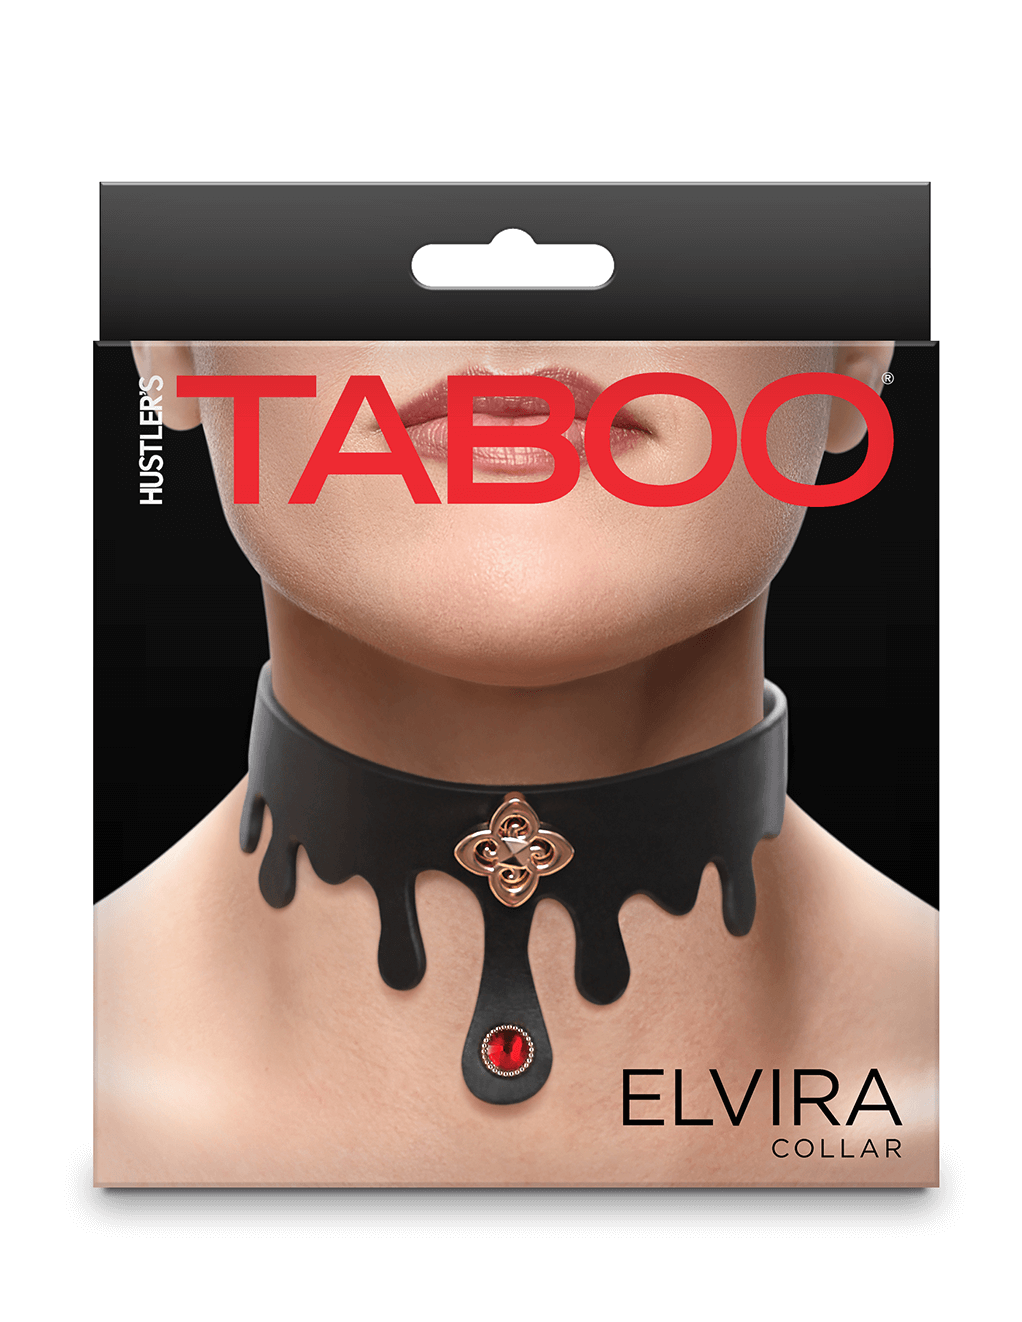 Taboo Elvira Collar - Box - Front